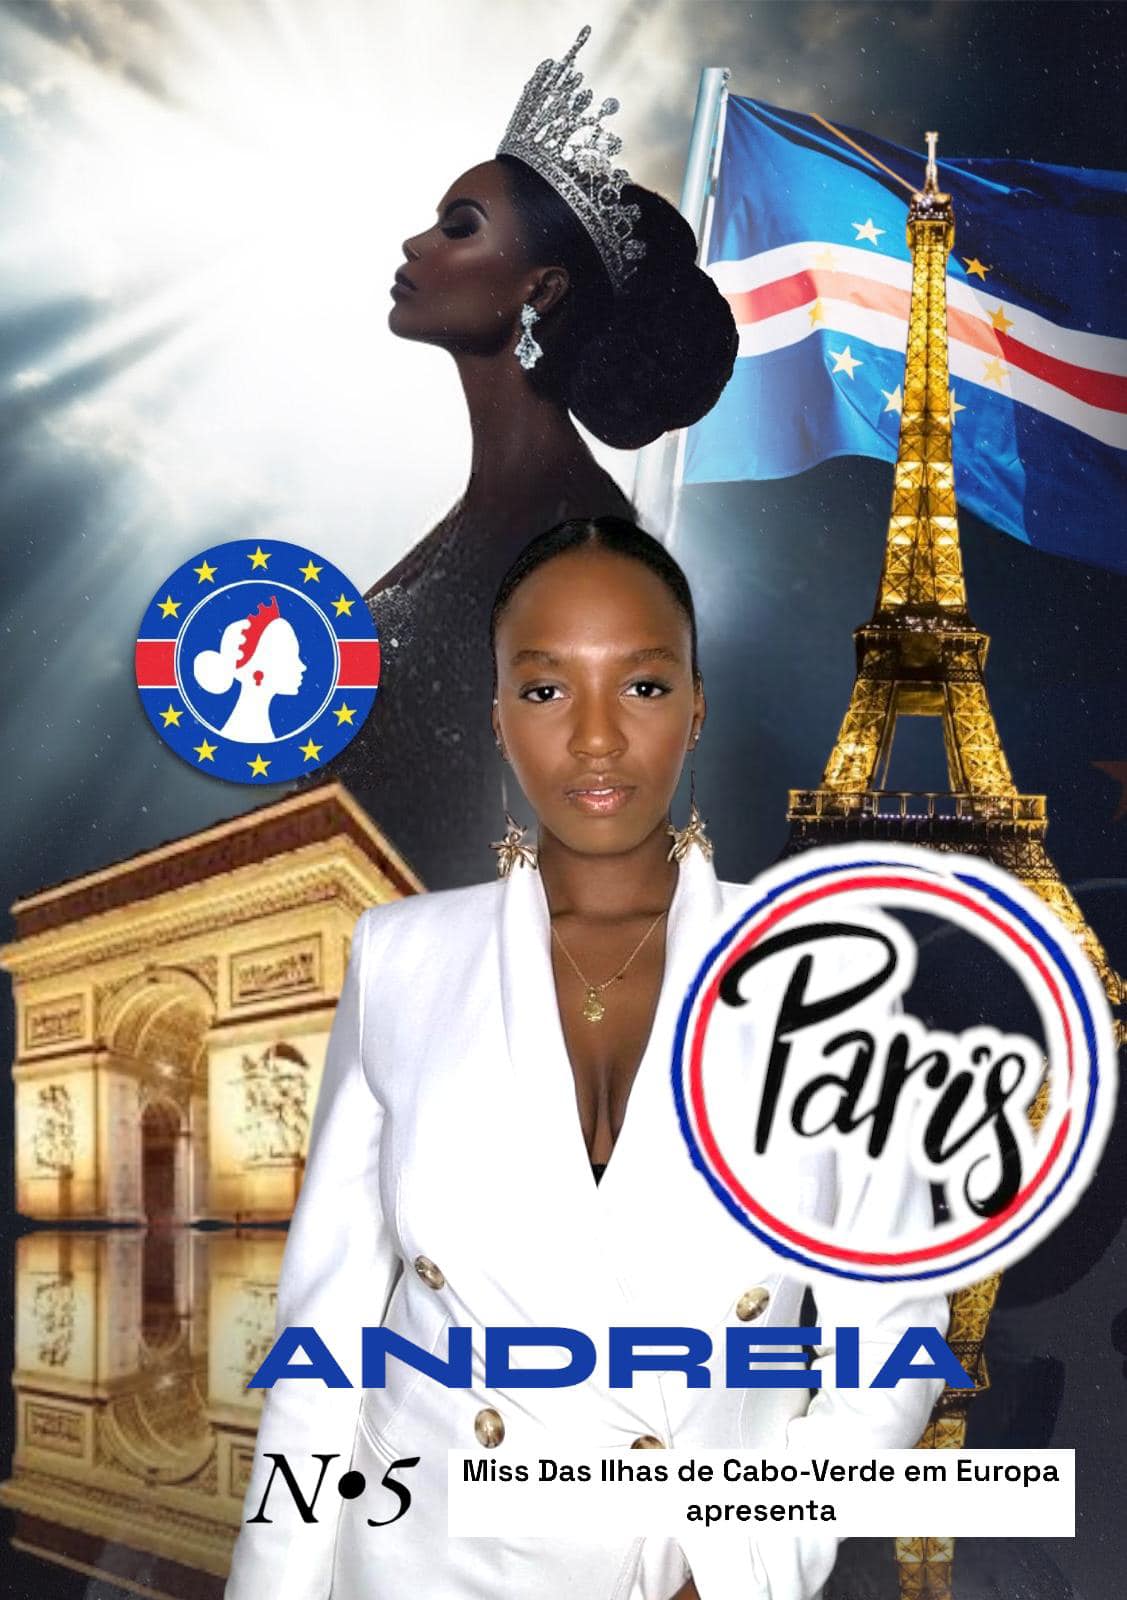 VOTE-NOW -  Contestant Number 5 Miss Andreia will represent Paris -France